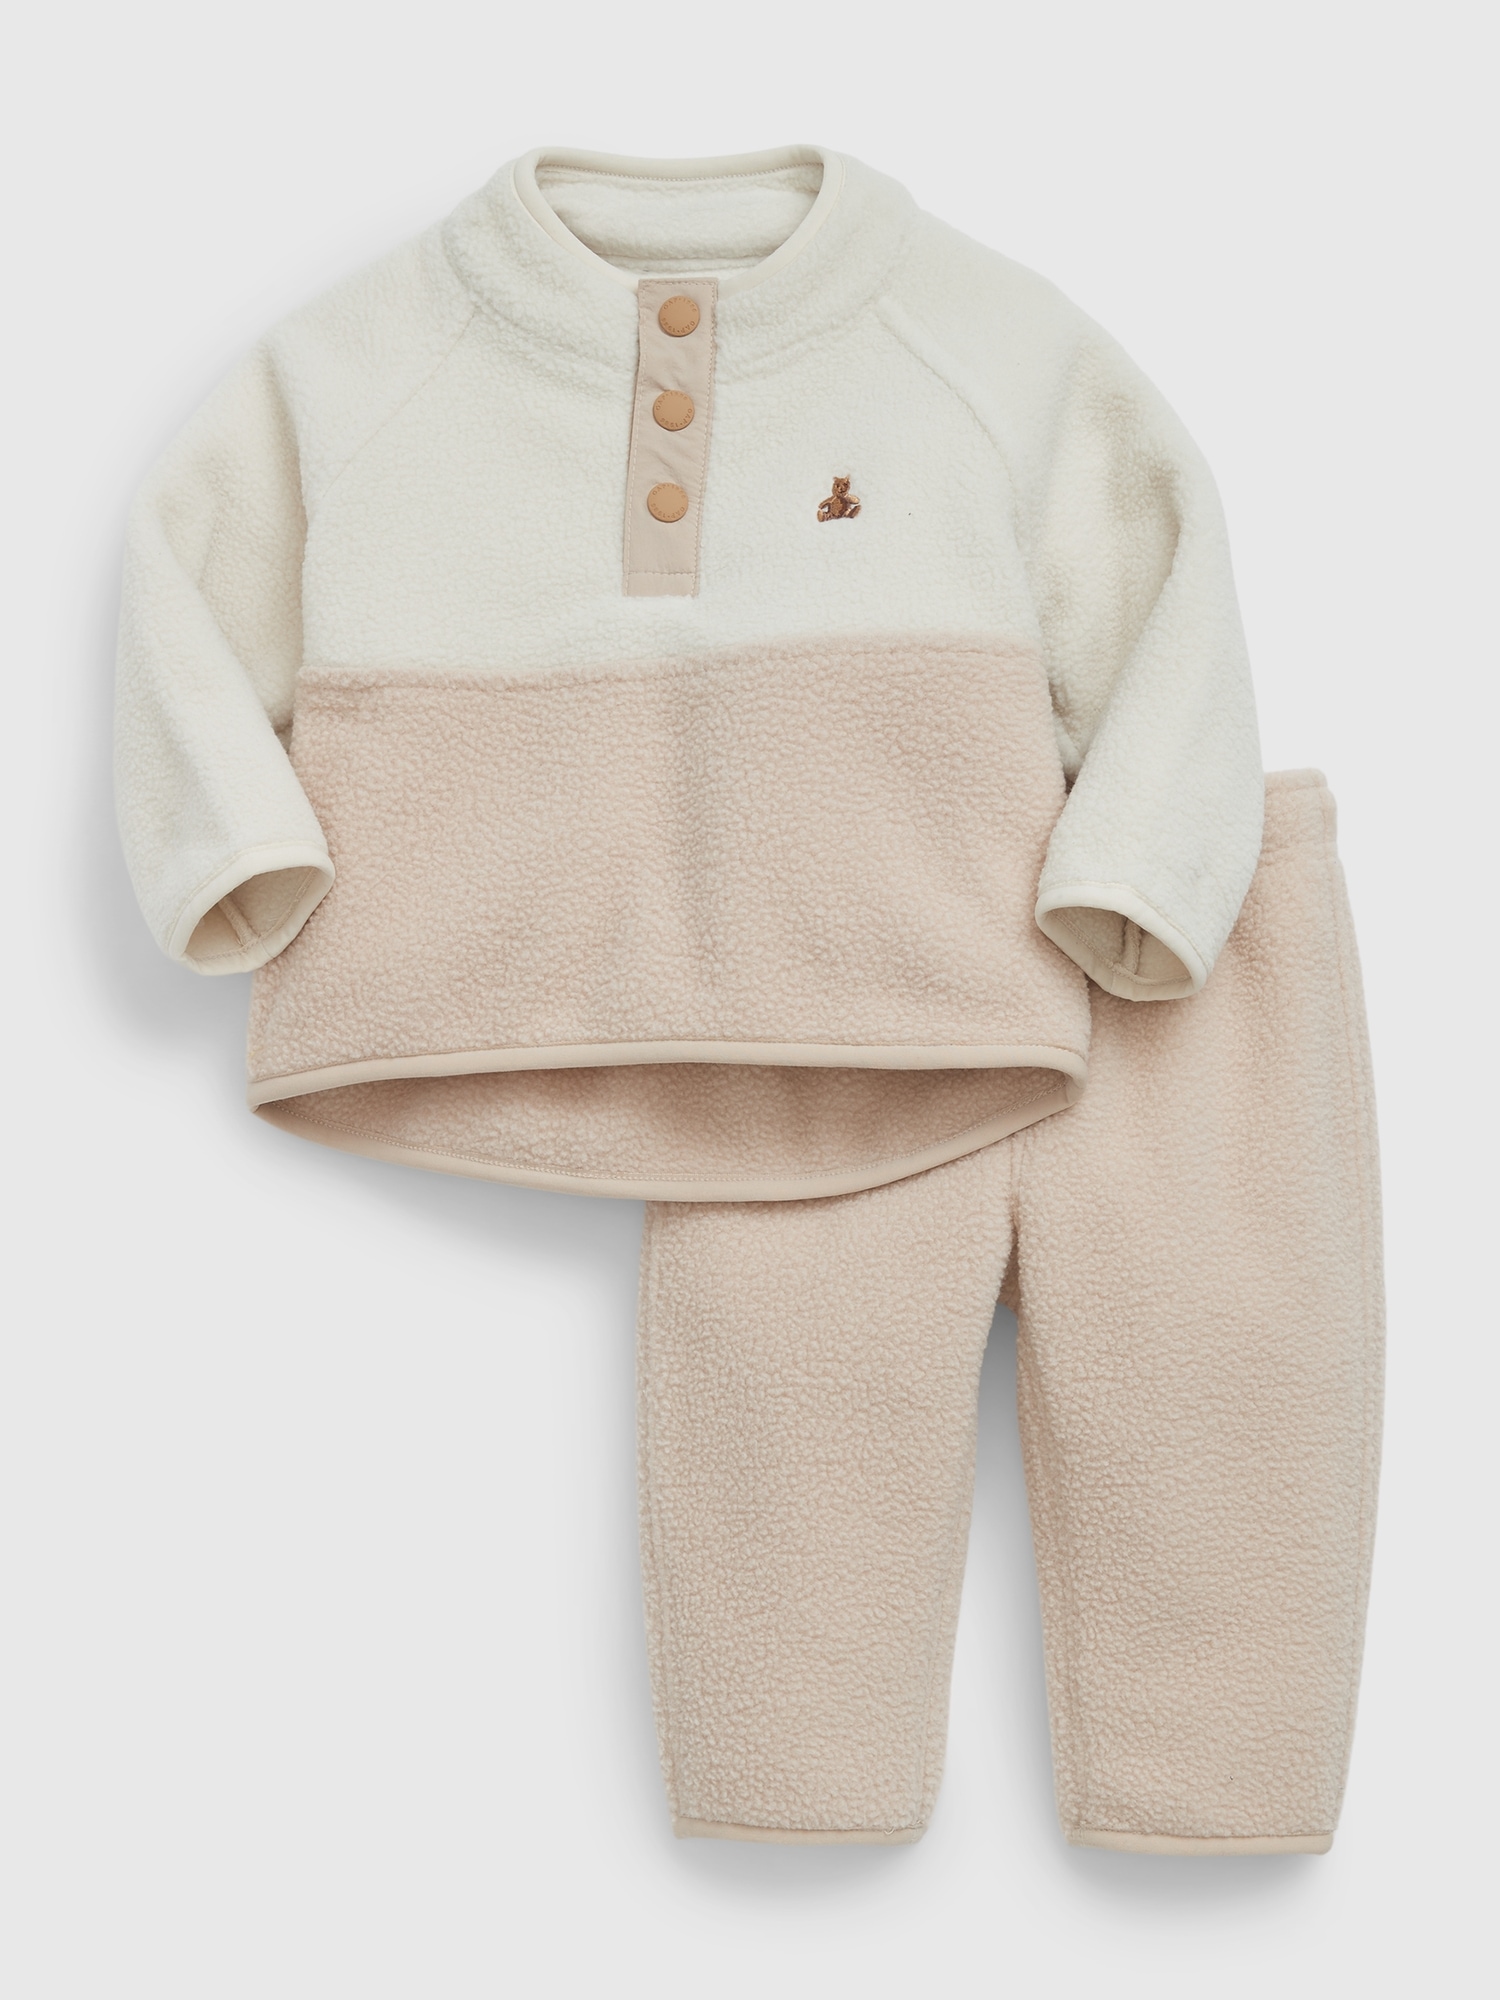 Baby Arctic Fleece Outfit Set